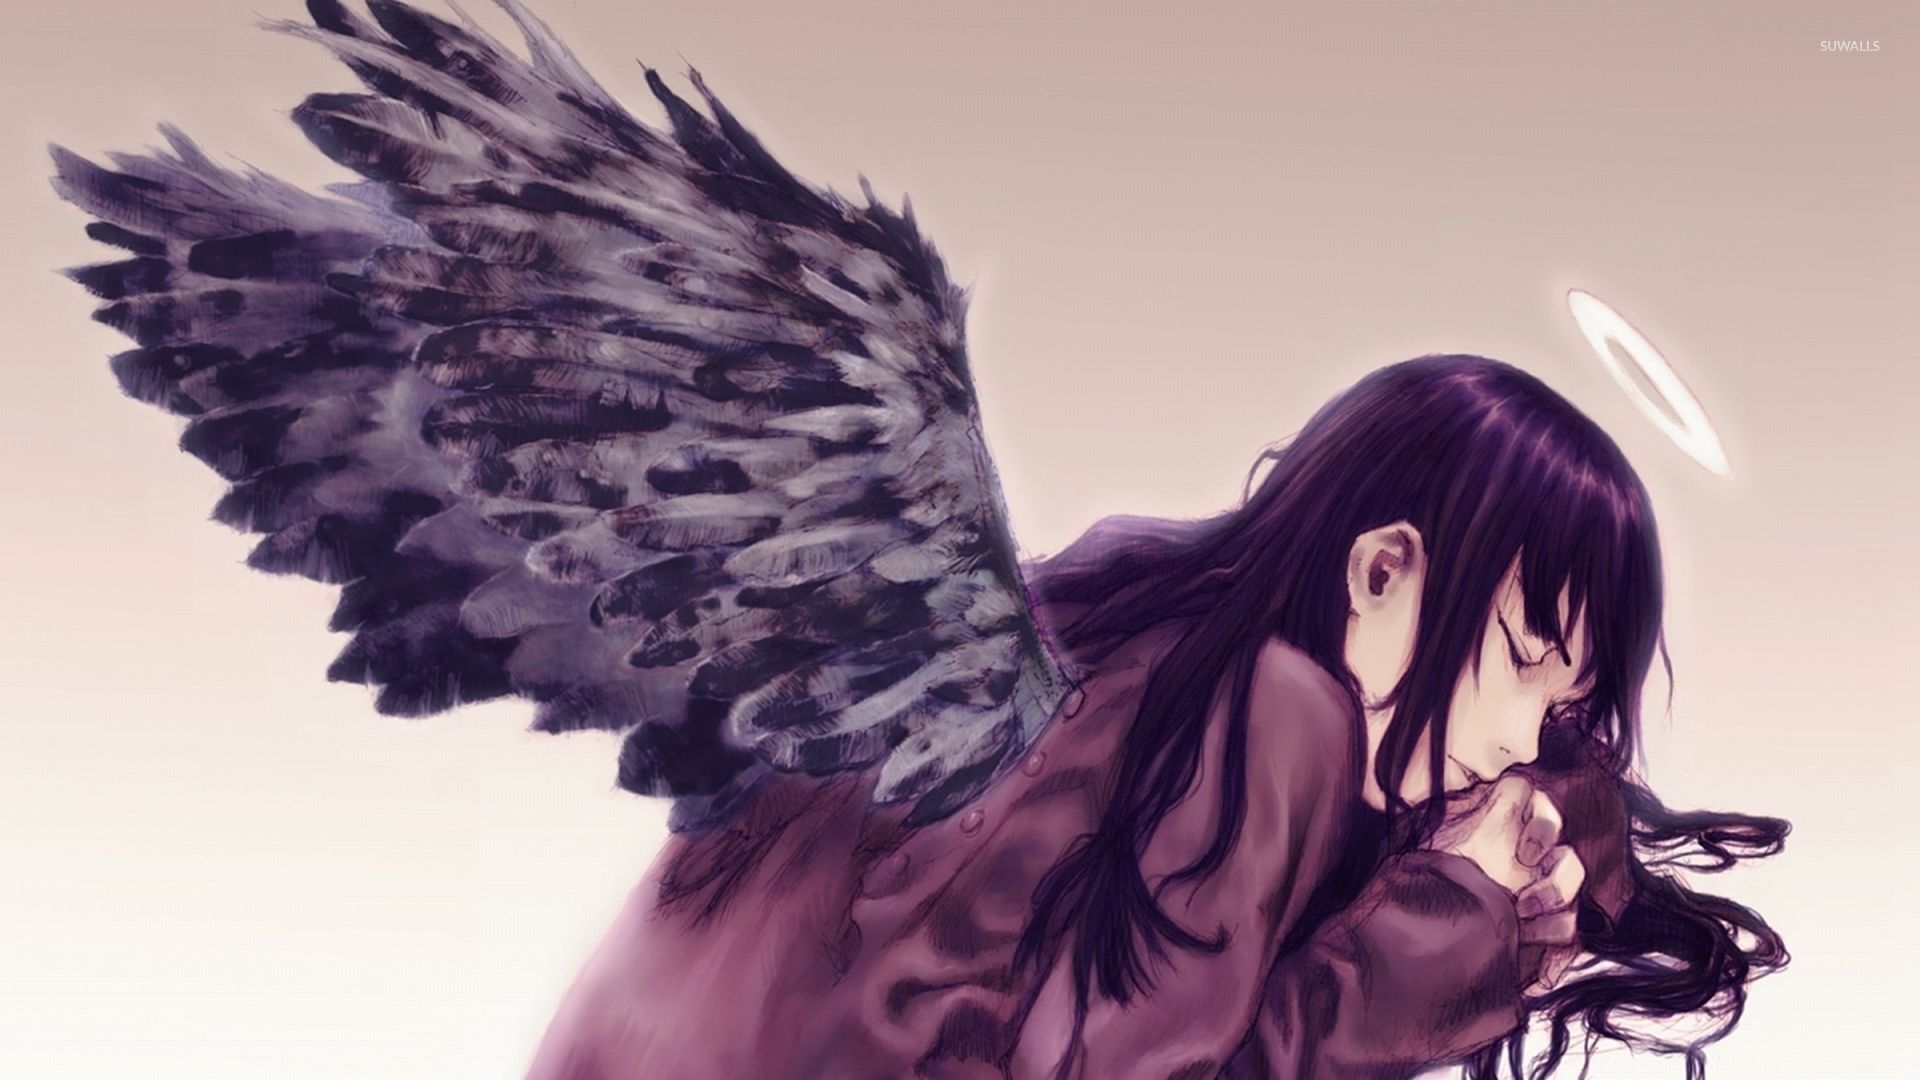 Anime Girl Black Wings Wallpapers